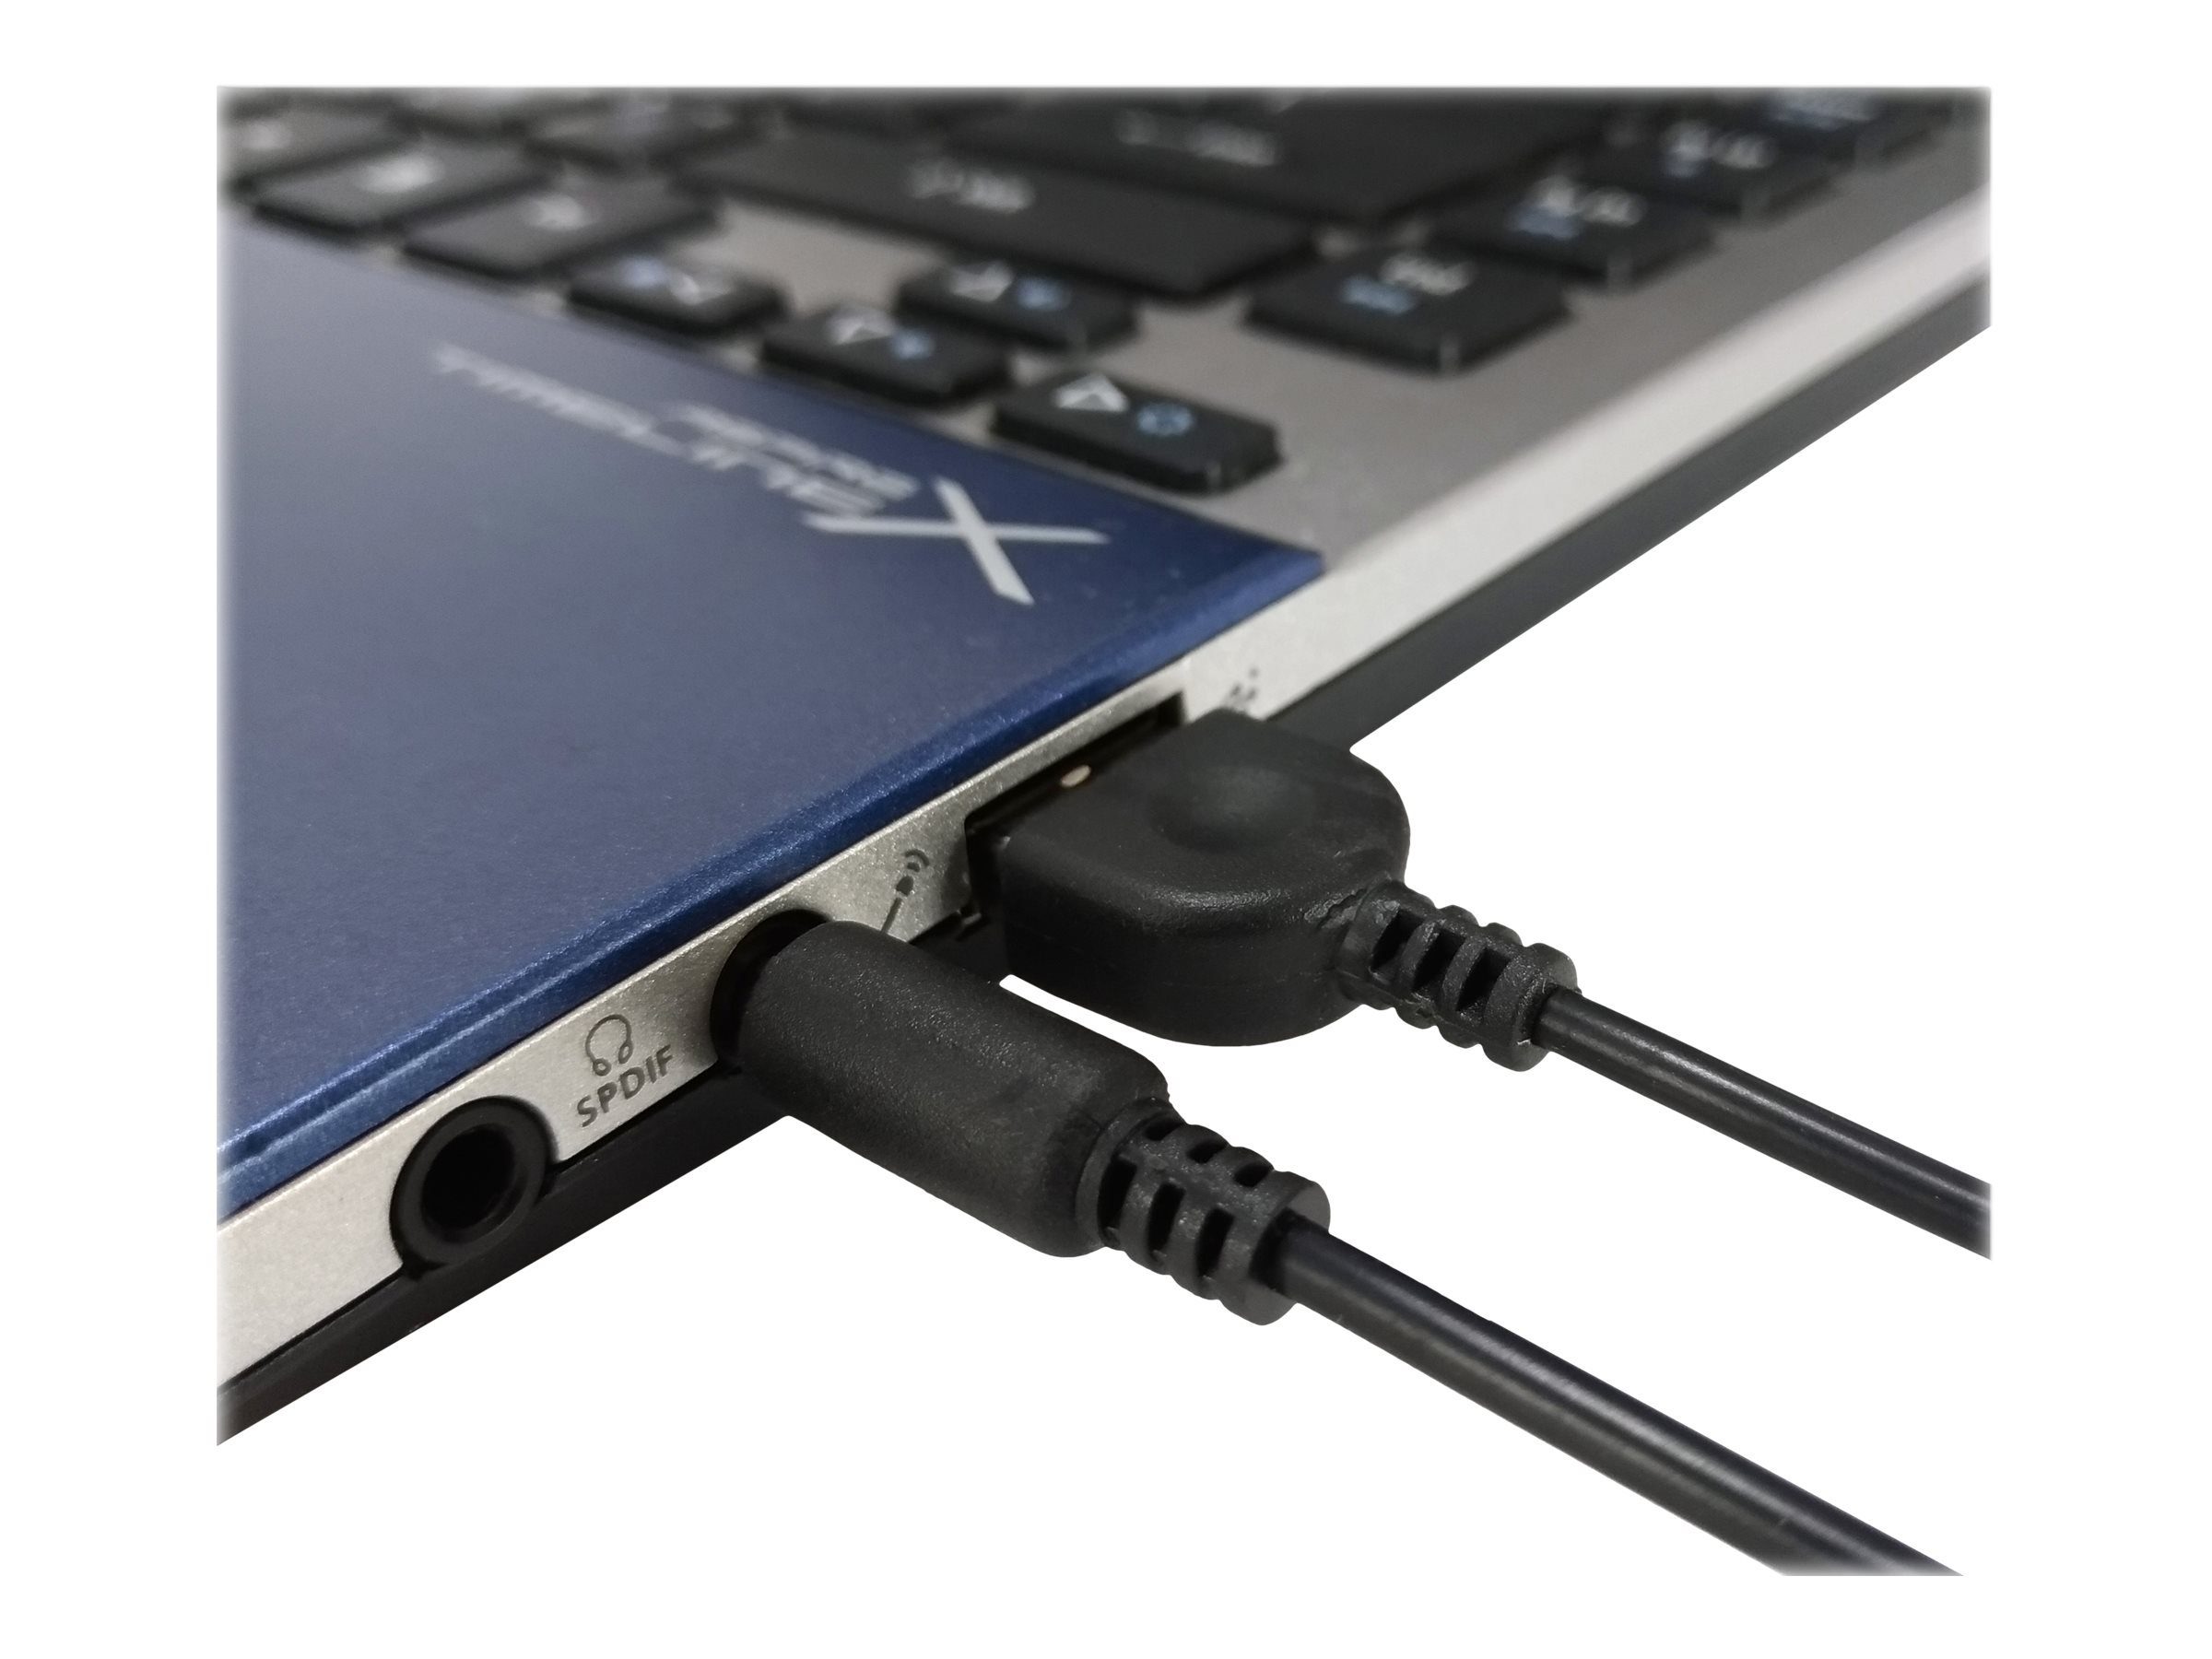 PC, u. PC-Lautsprecher DATA Mini DIGITAL f. schwarz Lautsprecher USB EQUIP Notebook